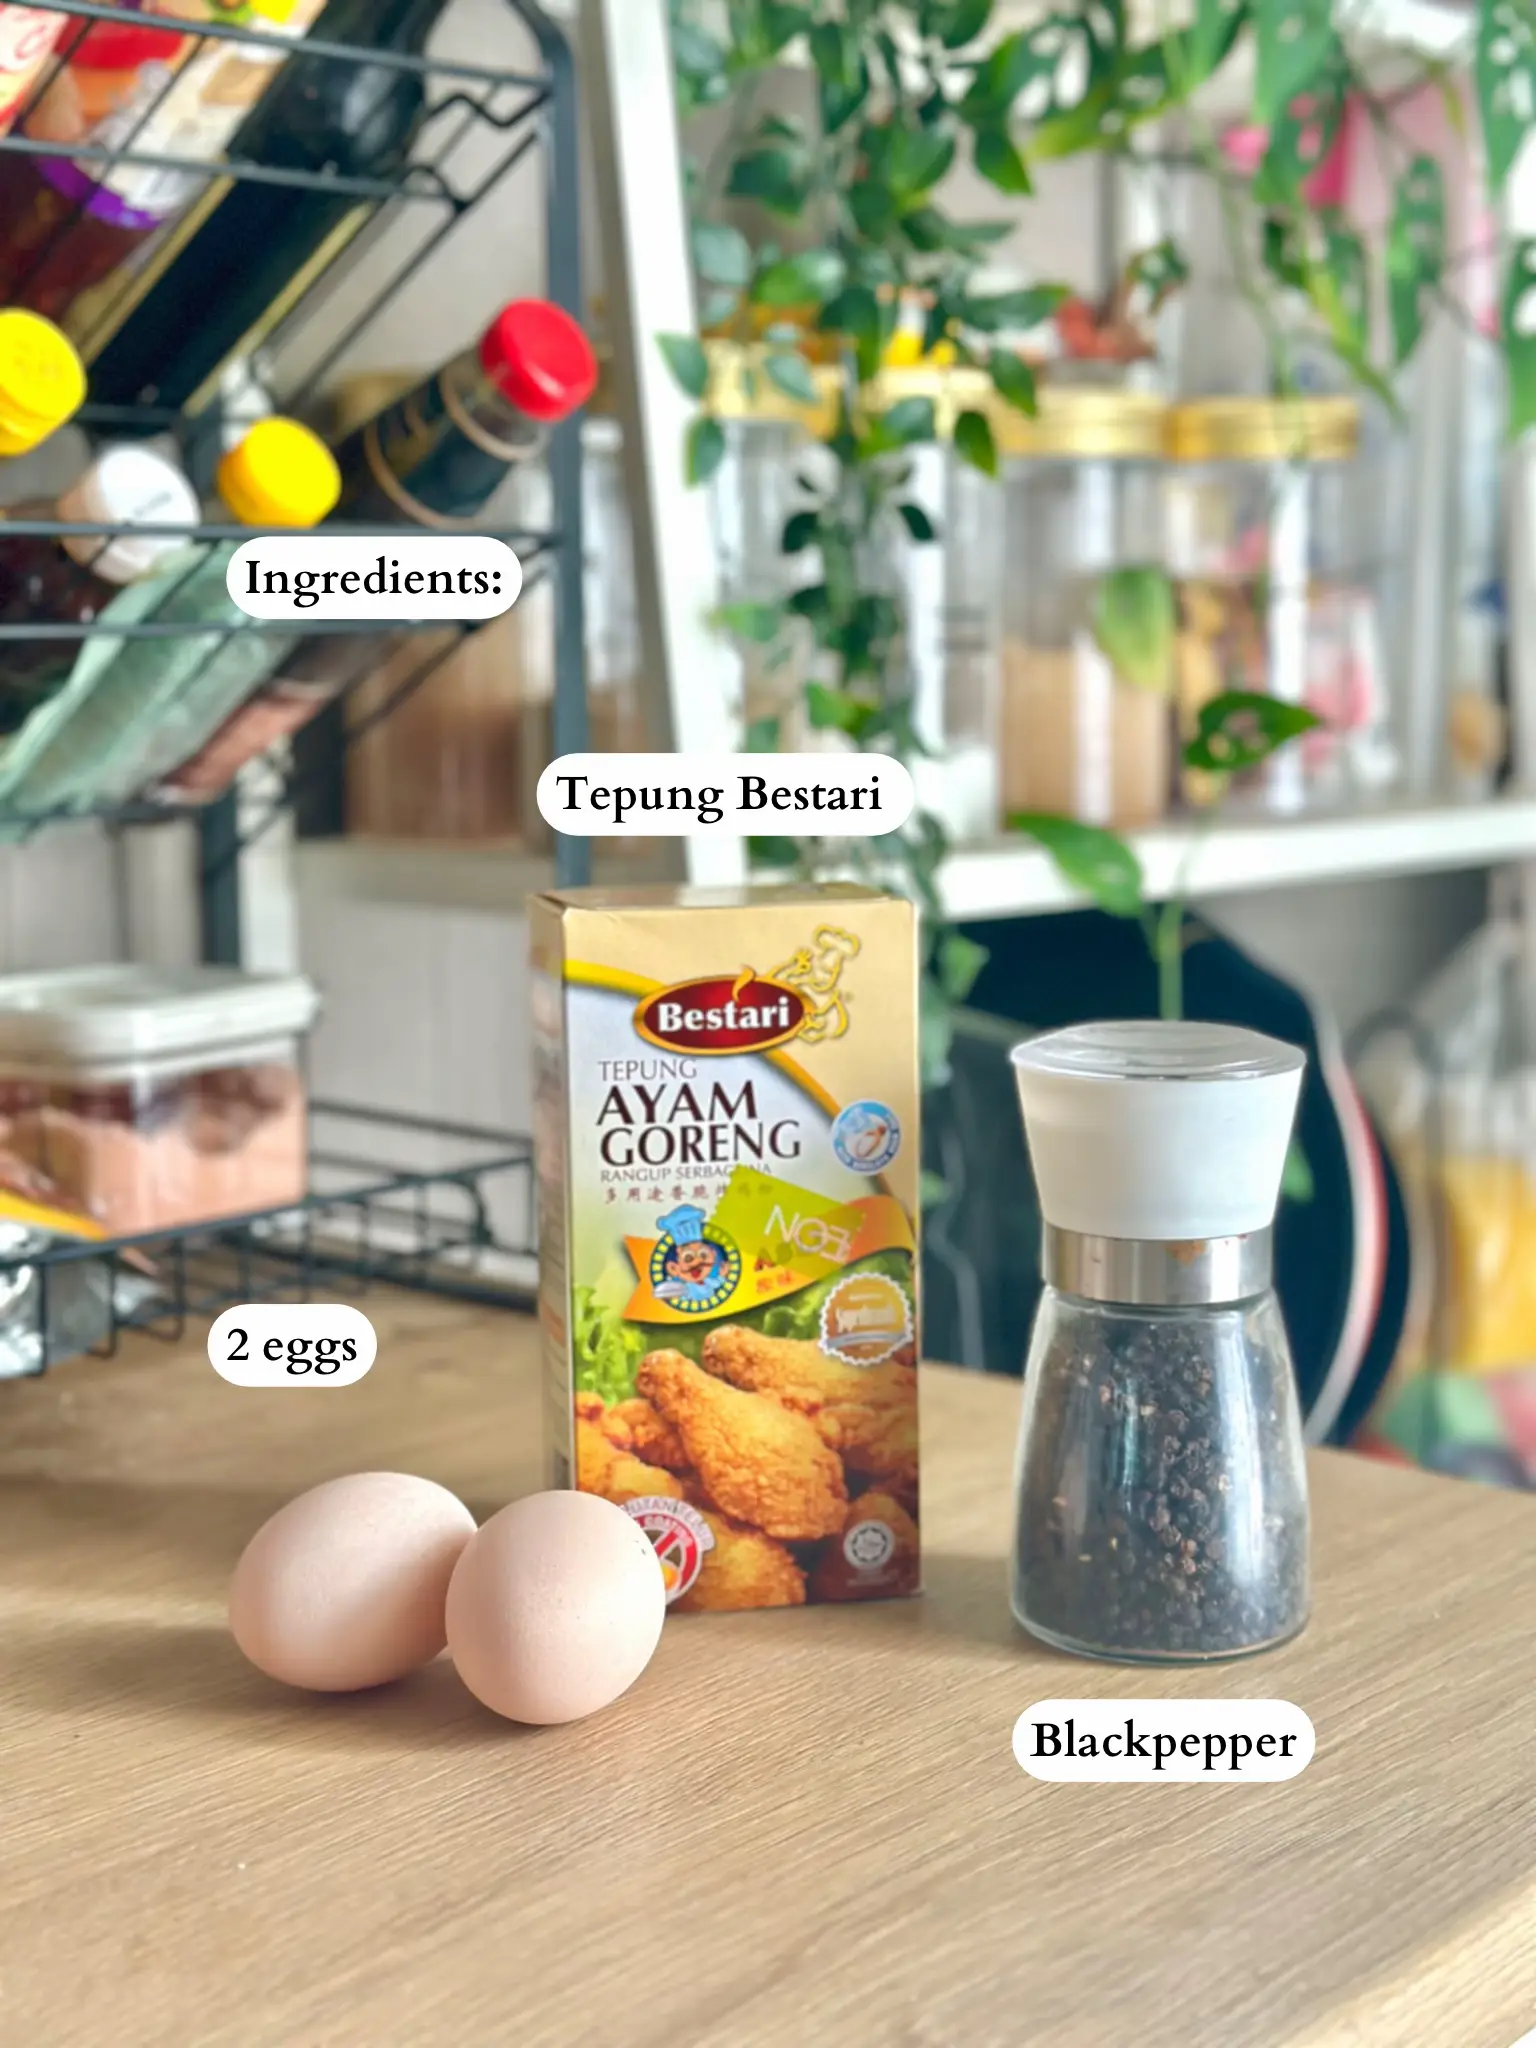 Bestari Crispy Fried Chicken Coating Mix Original Eggless coating